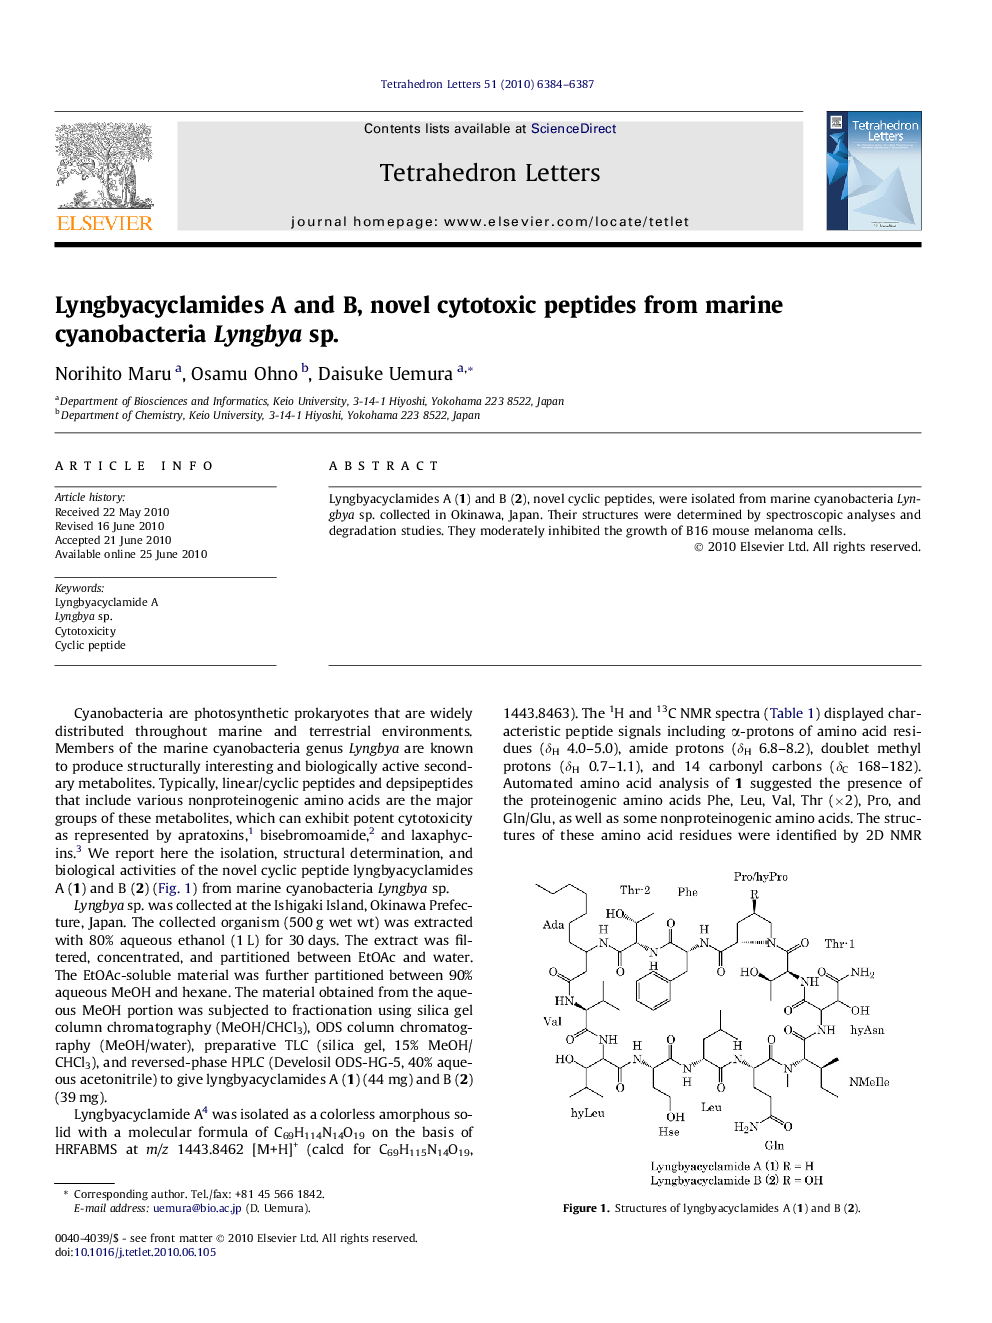 Lyngbyacyclamides A and B, novel cytotoxic peptides from marine cyanobacteria Lyngbya sp.